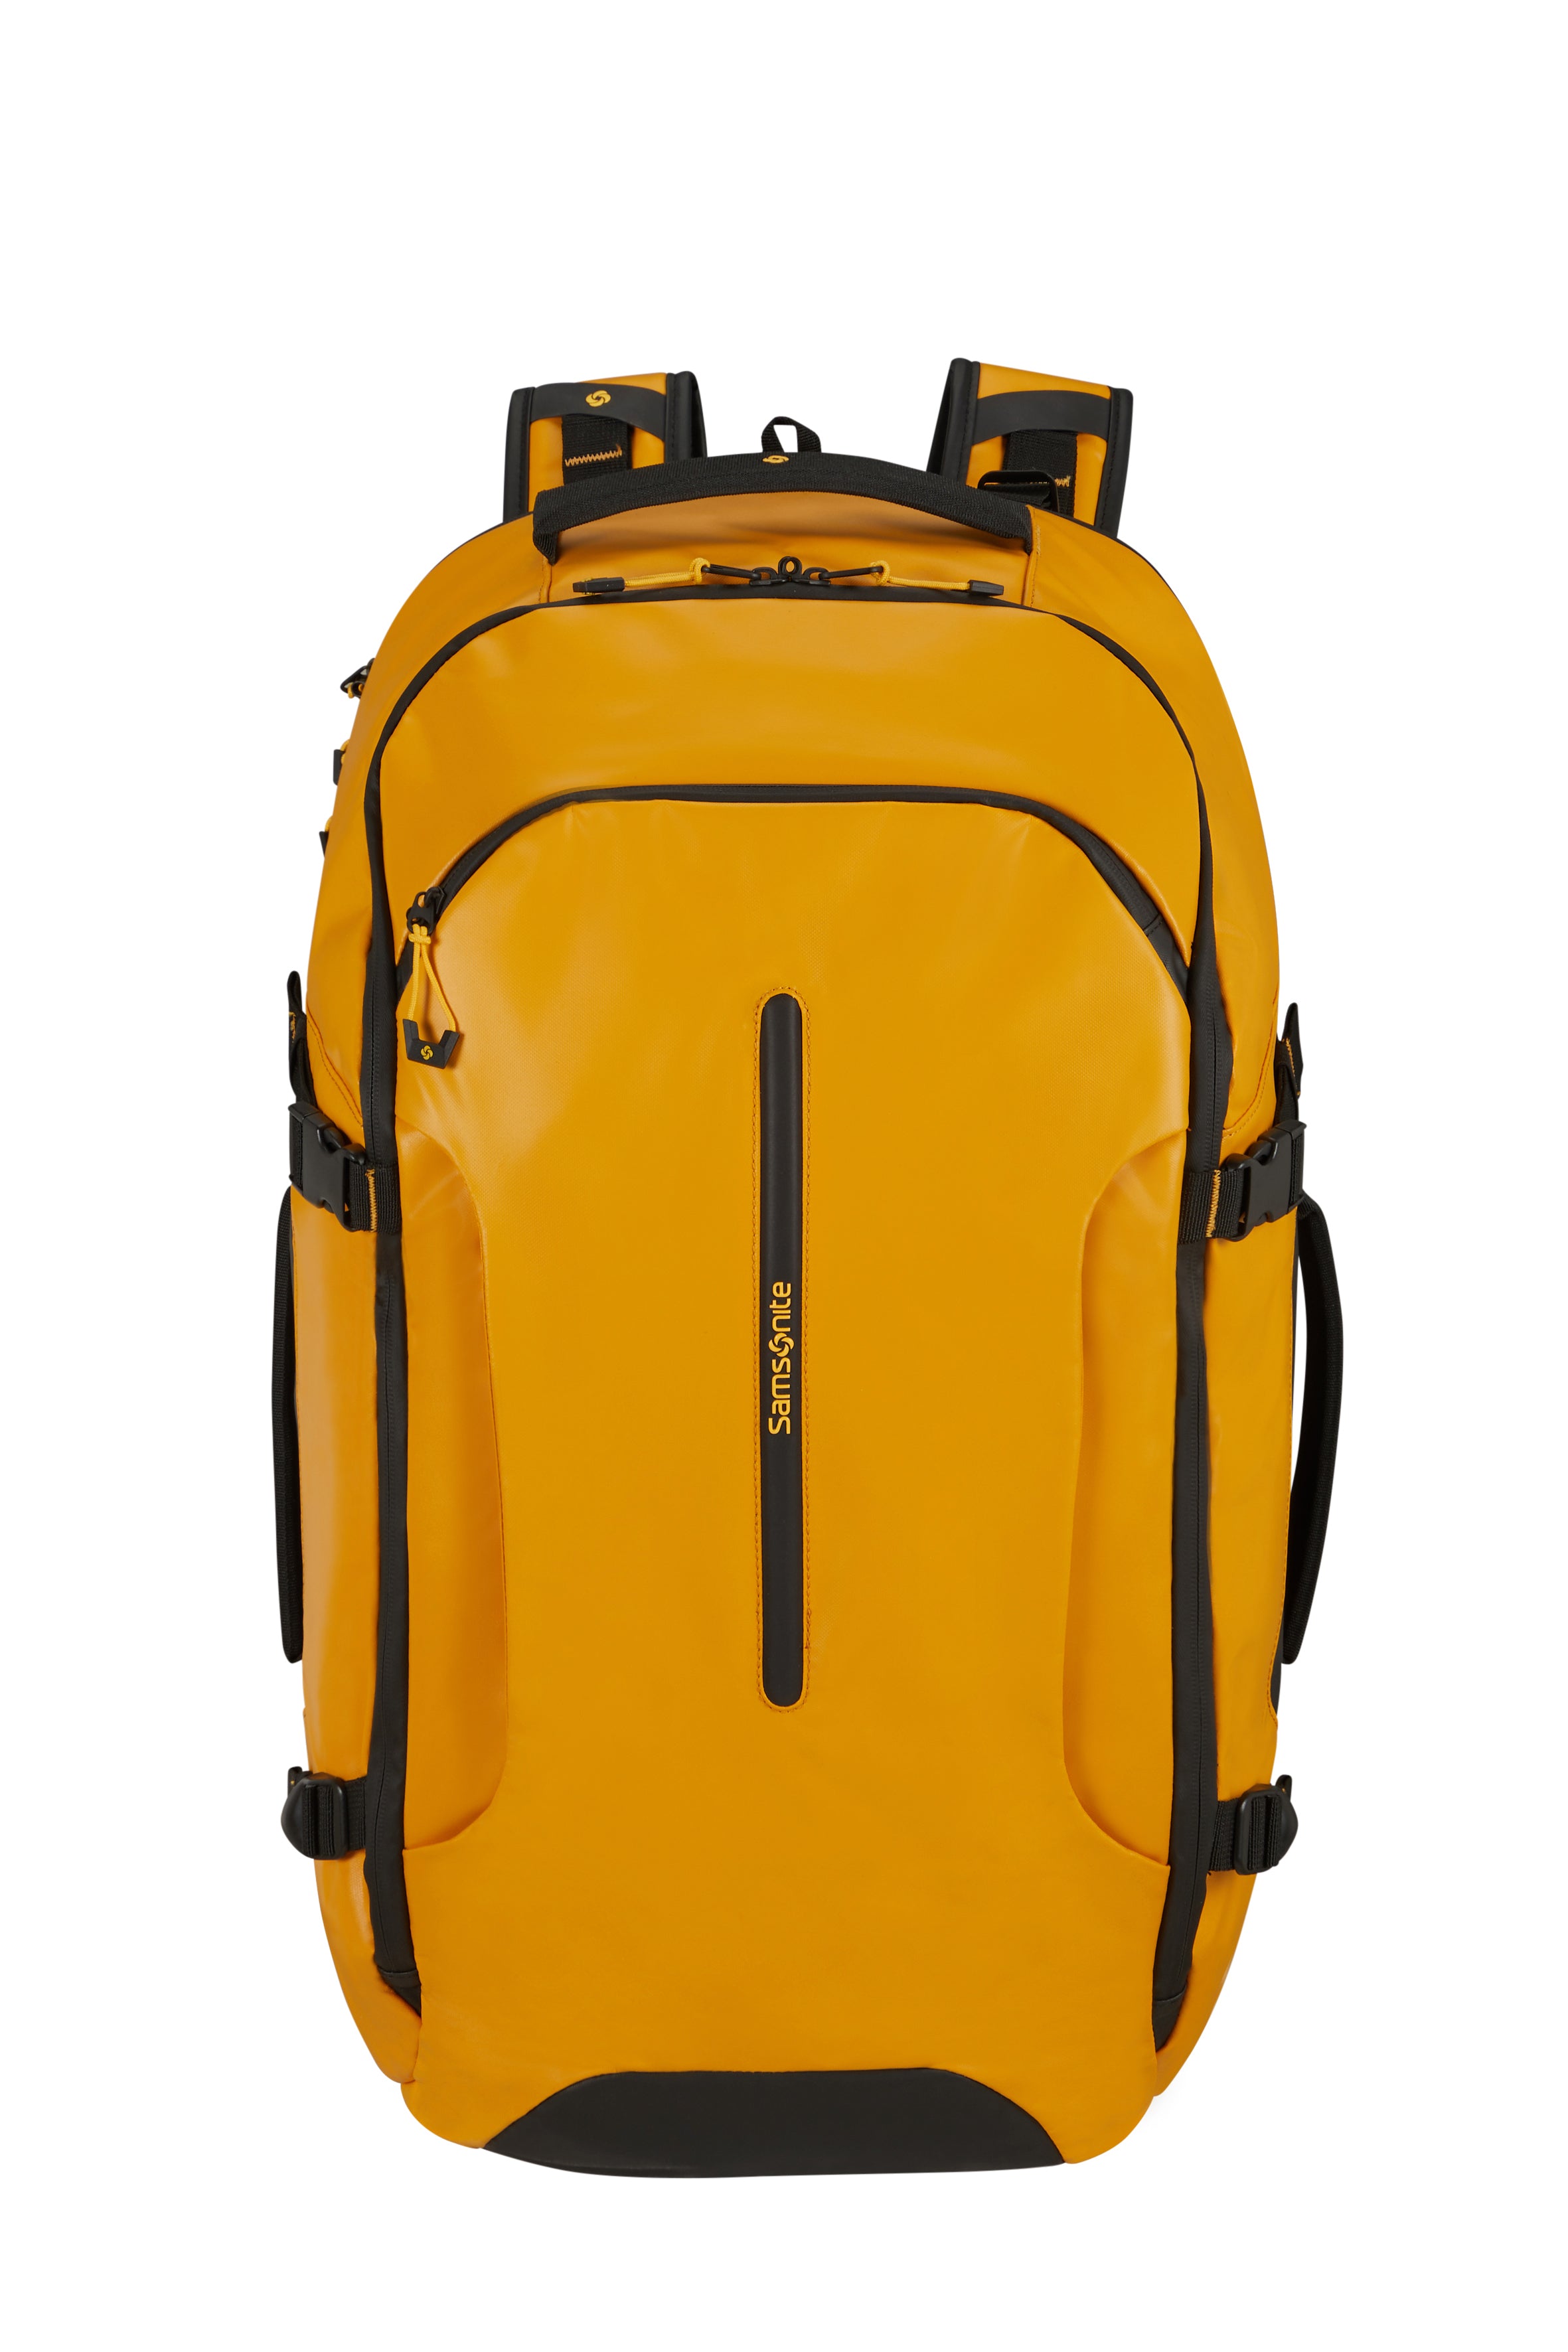 Samsonite Ecodiver Travel Backpack Medium